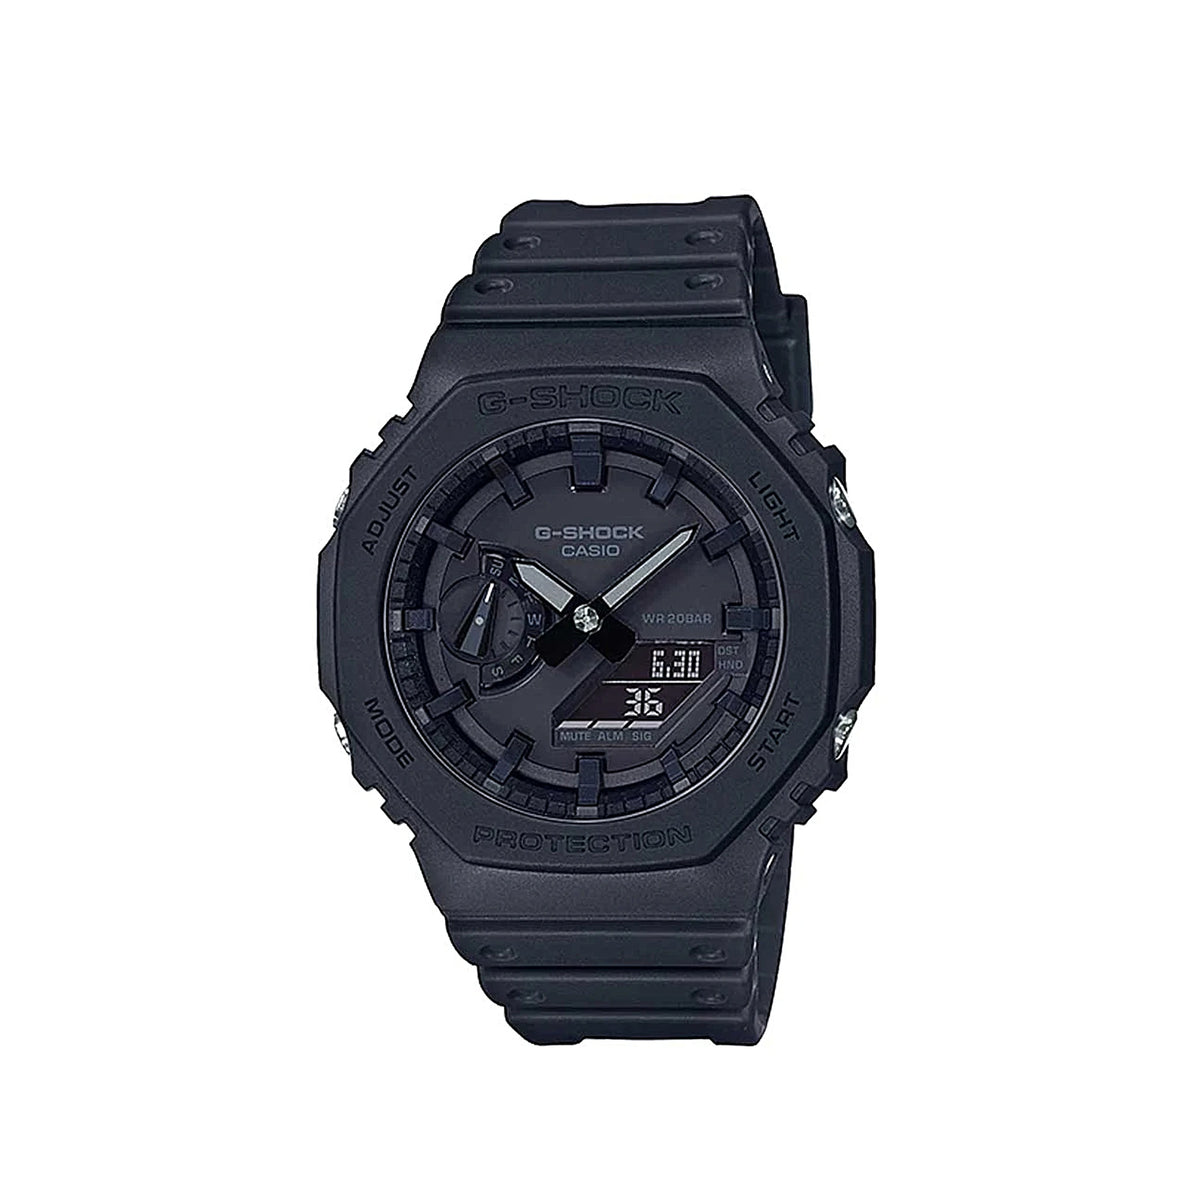 Time縲�GA-2100-1A1DR縲�For縲�Strap縲�Depot縲�Analog縲�Men縲�Digital縲�G-Shock縲�Resin縲�窶薙��Casio縲�Black